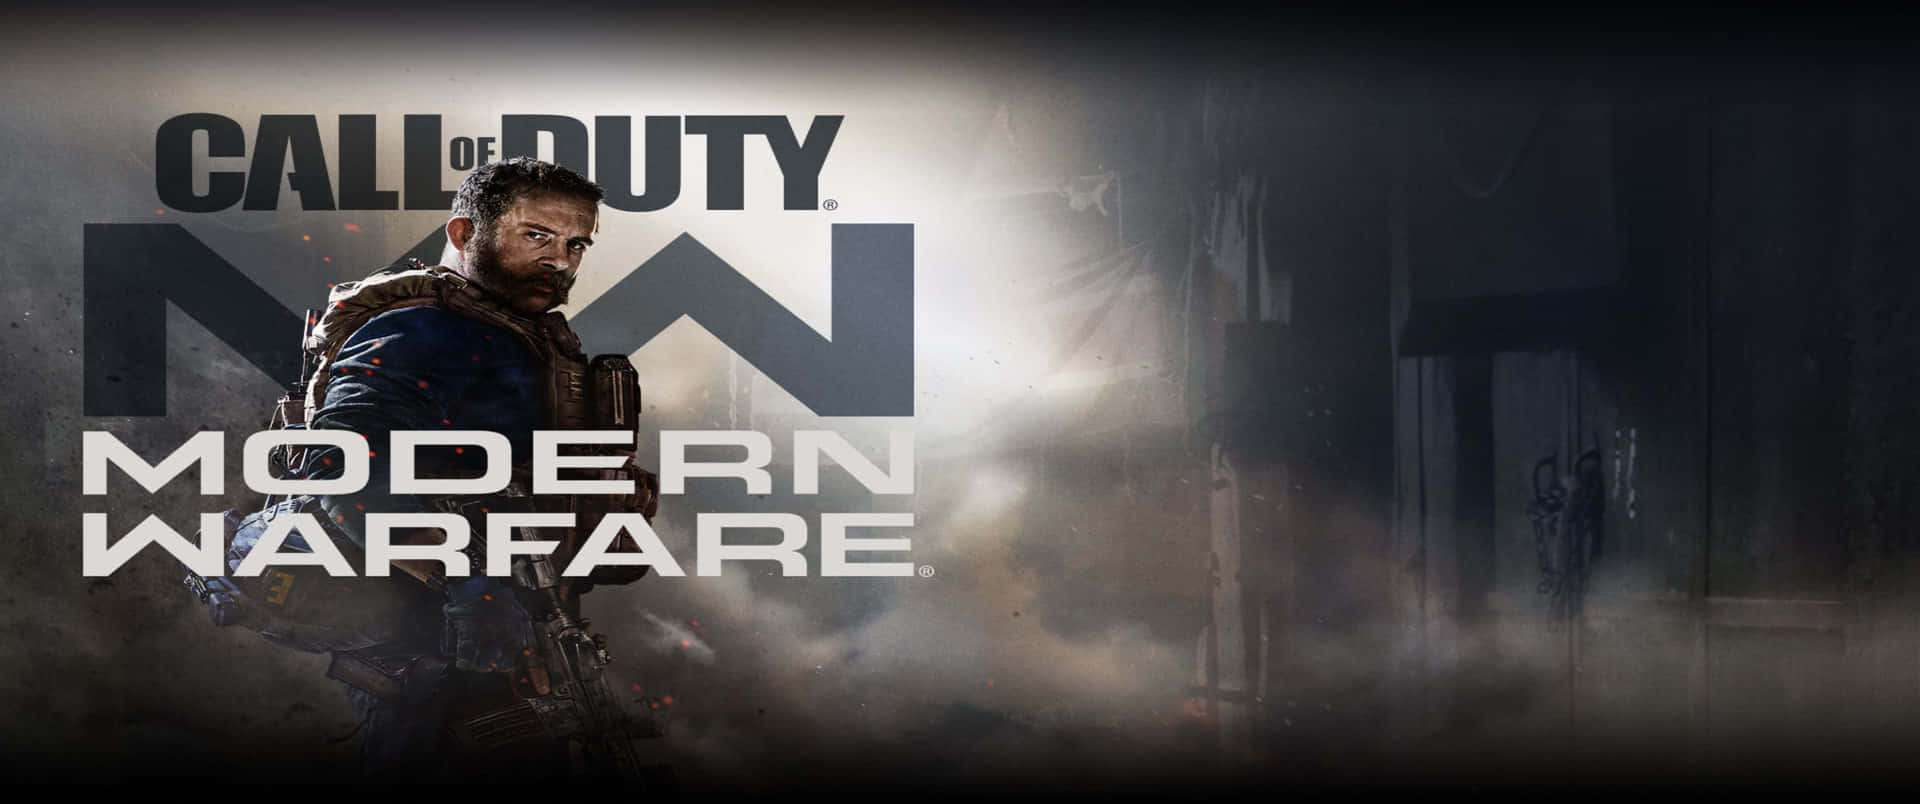 John Price Title 3440x1440p Call Of Duty Modern Warfare Background